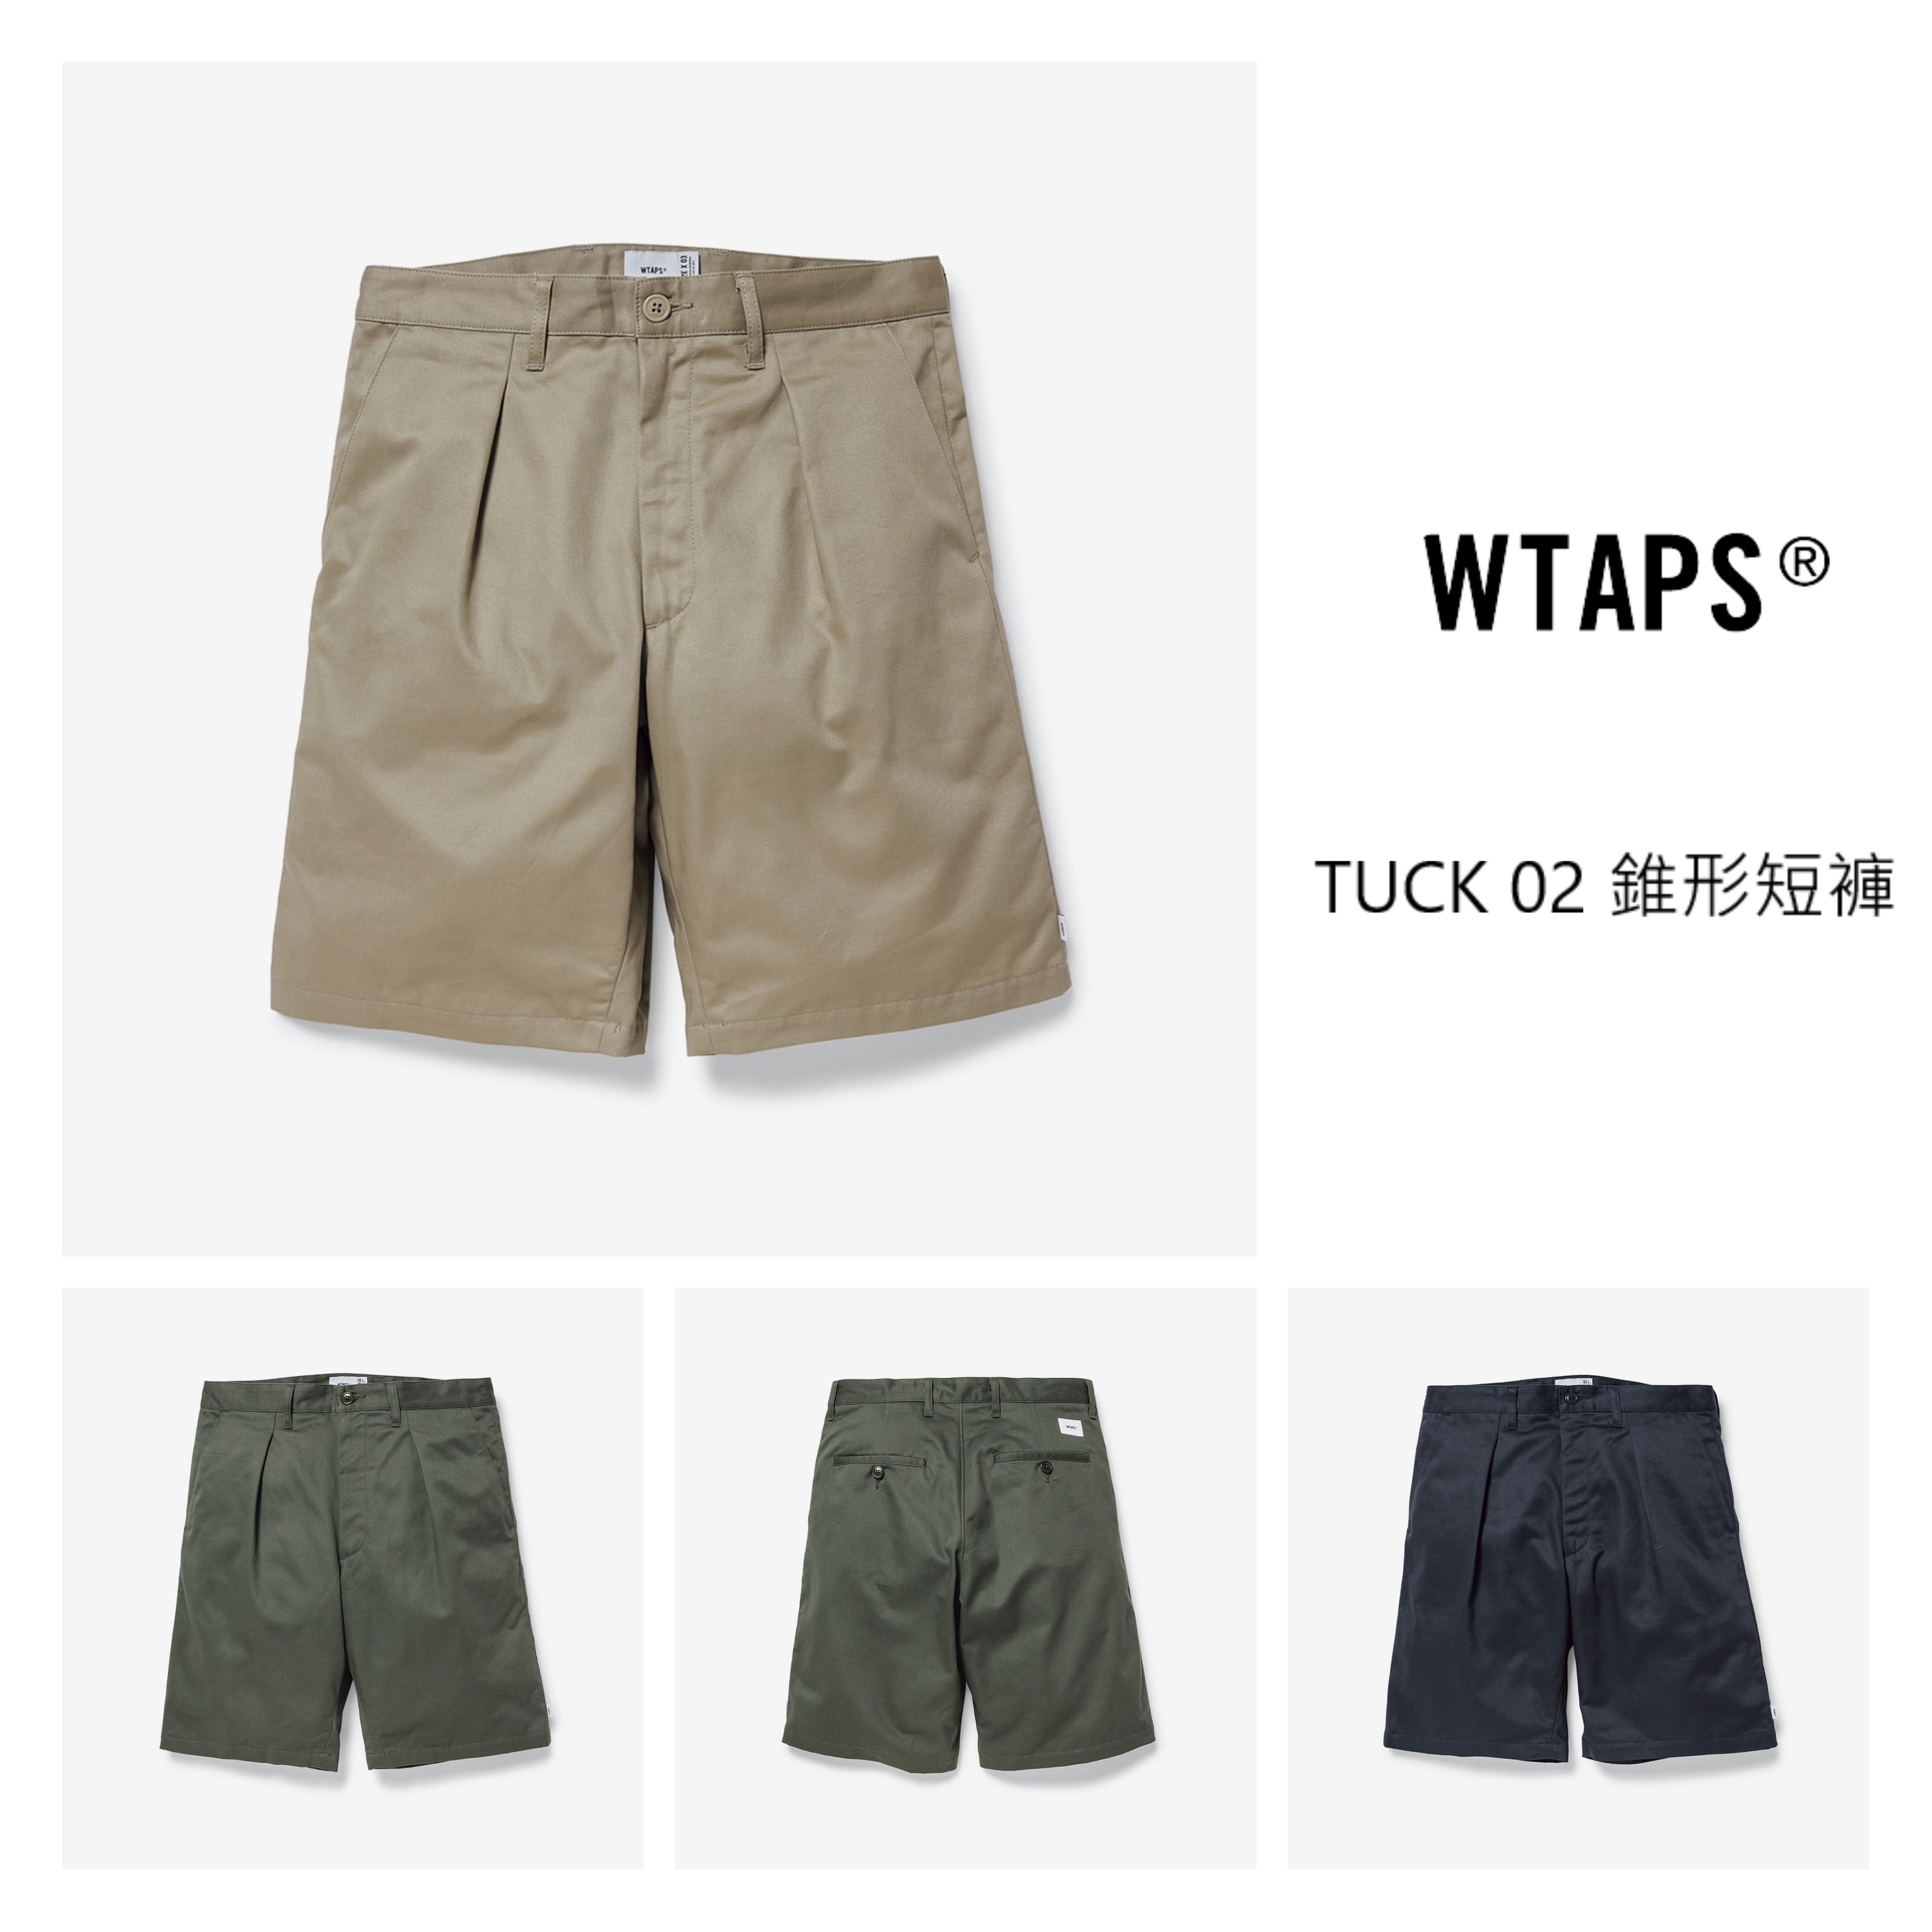 2021SS WTAPS TUCK 02 SHORTS COTTON TWILL 錐形寬褲短褲現貨